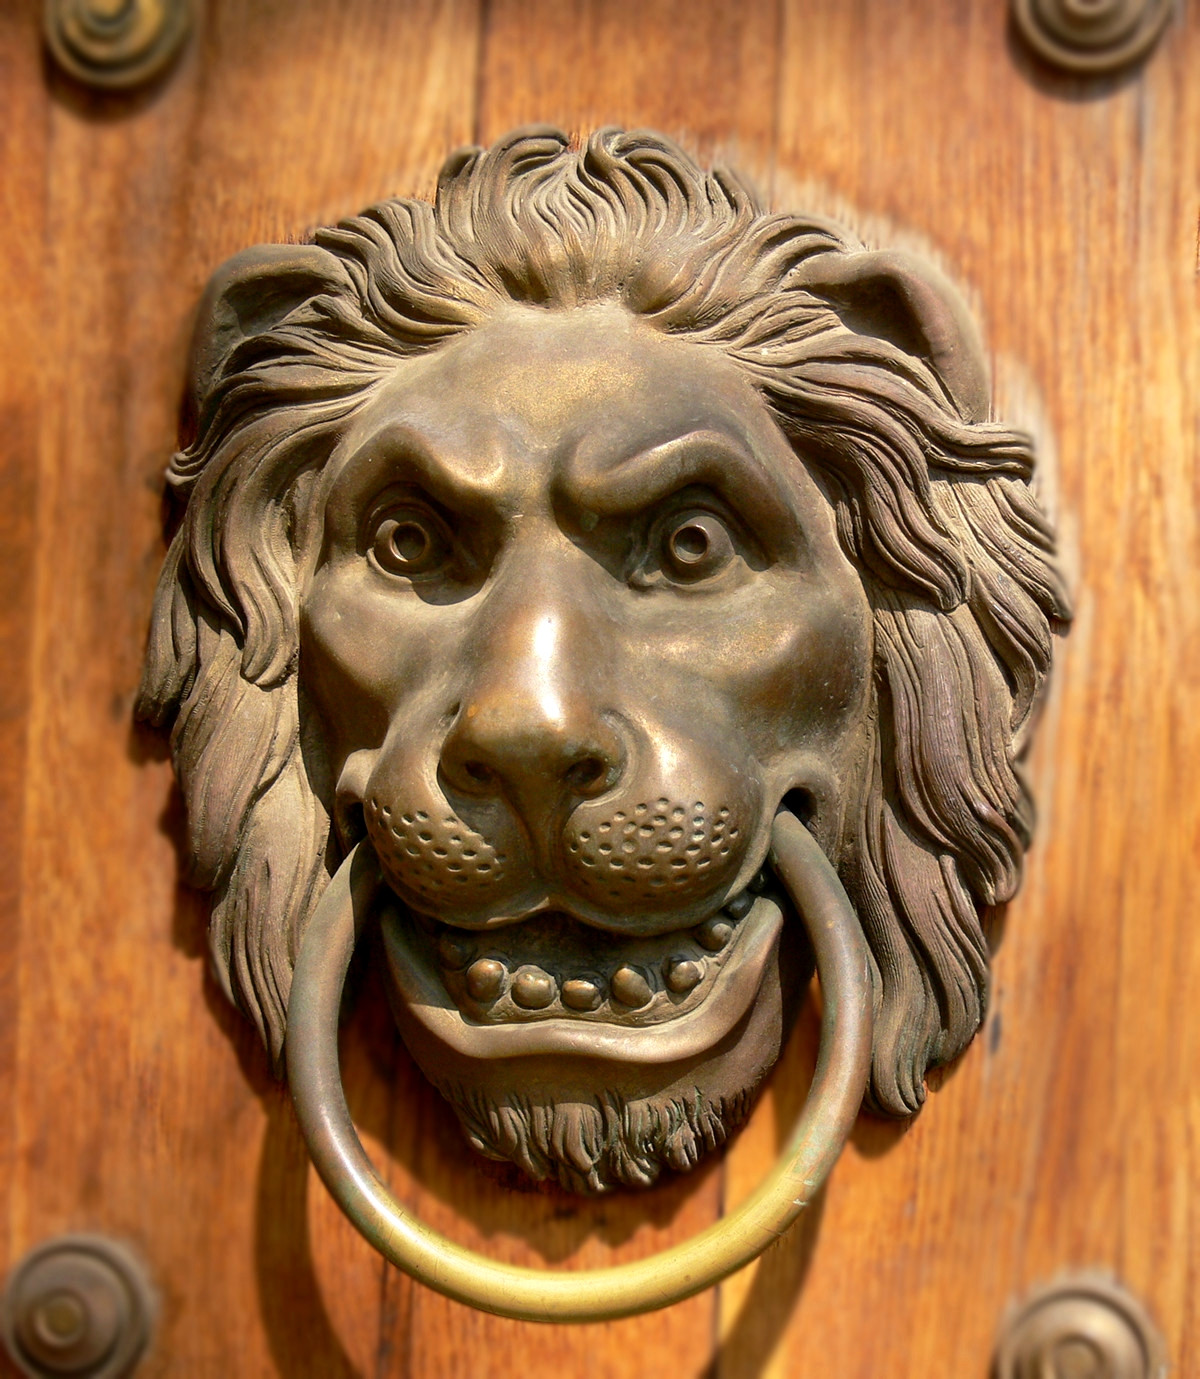 Lion door knocker at Lazienka Palace, Warsaw, Poland